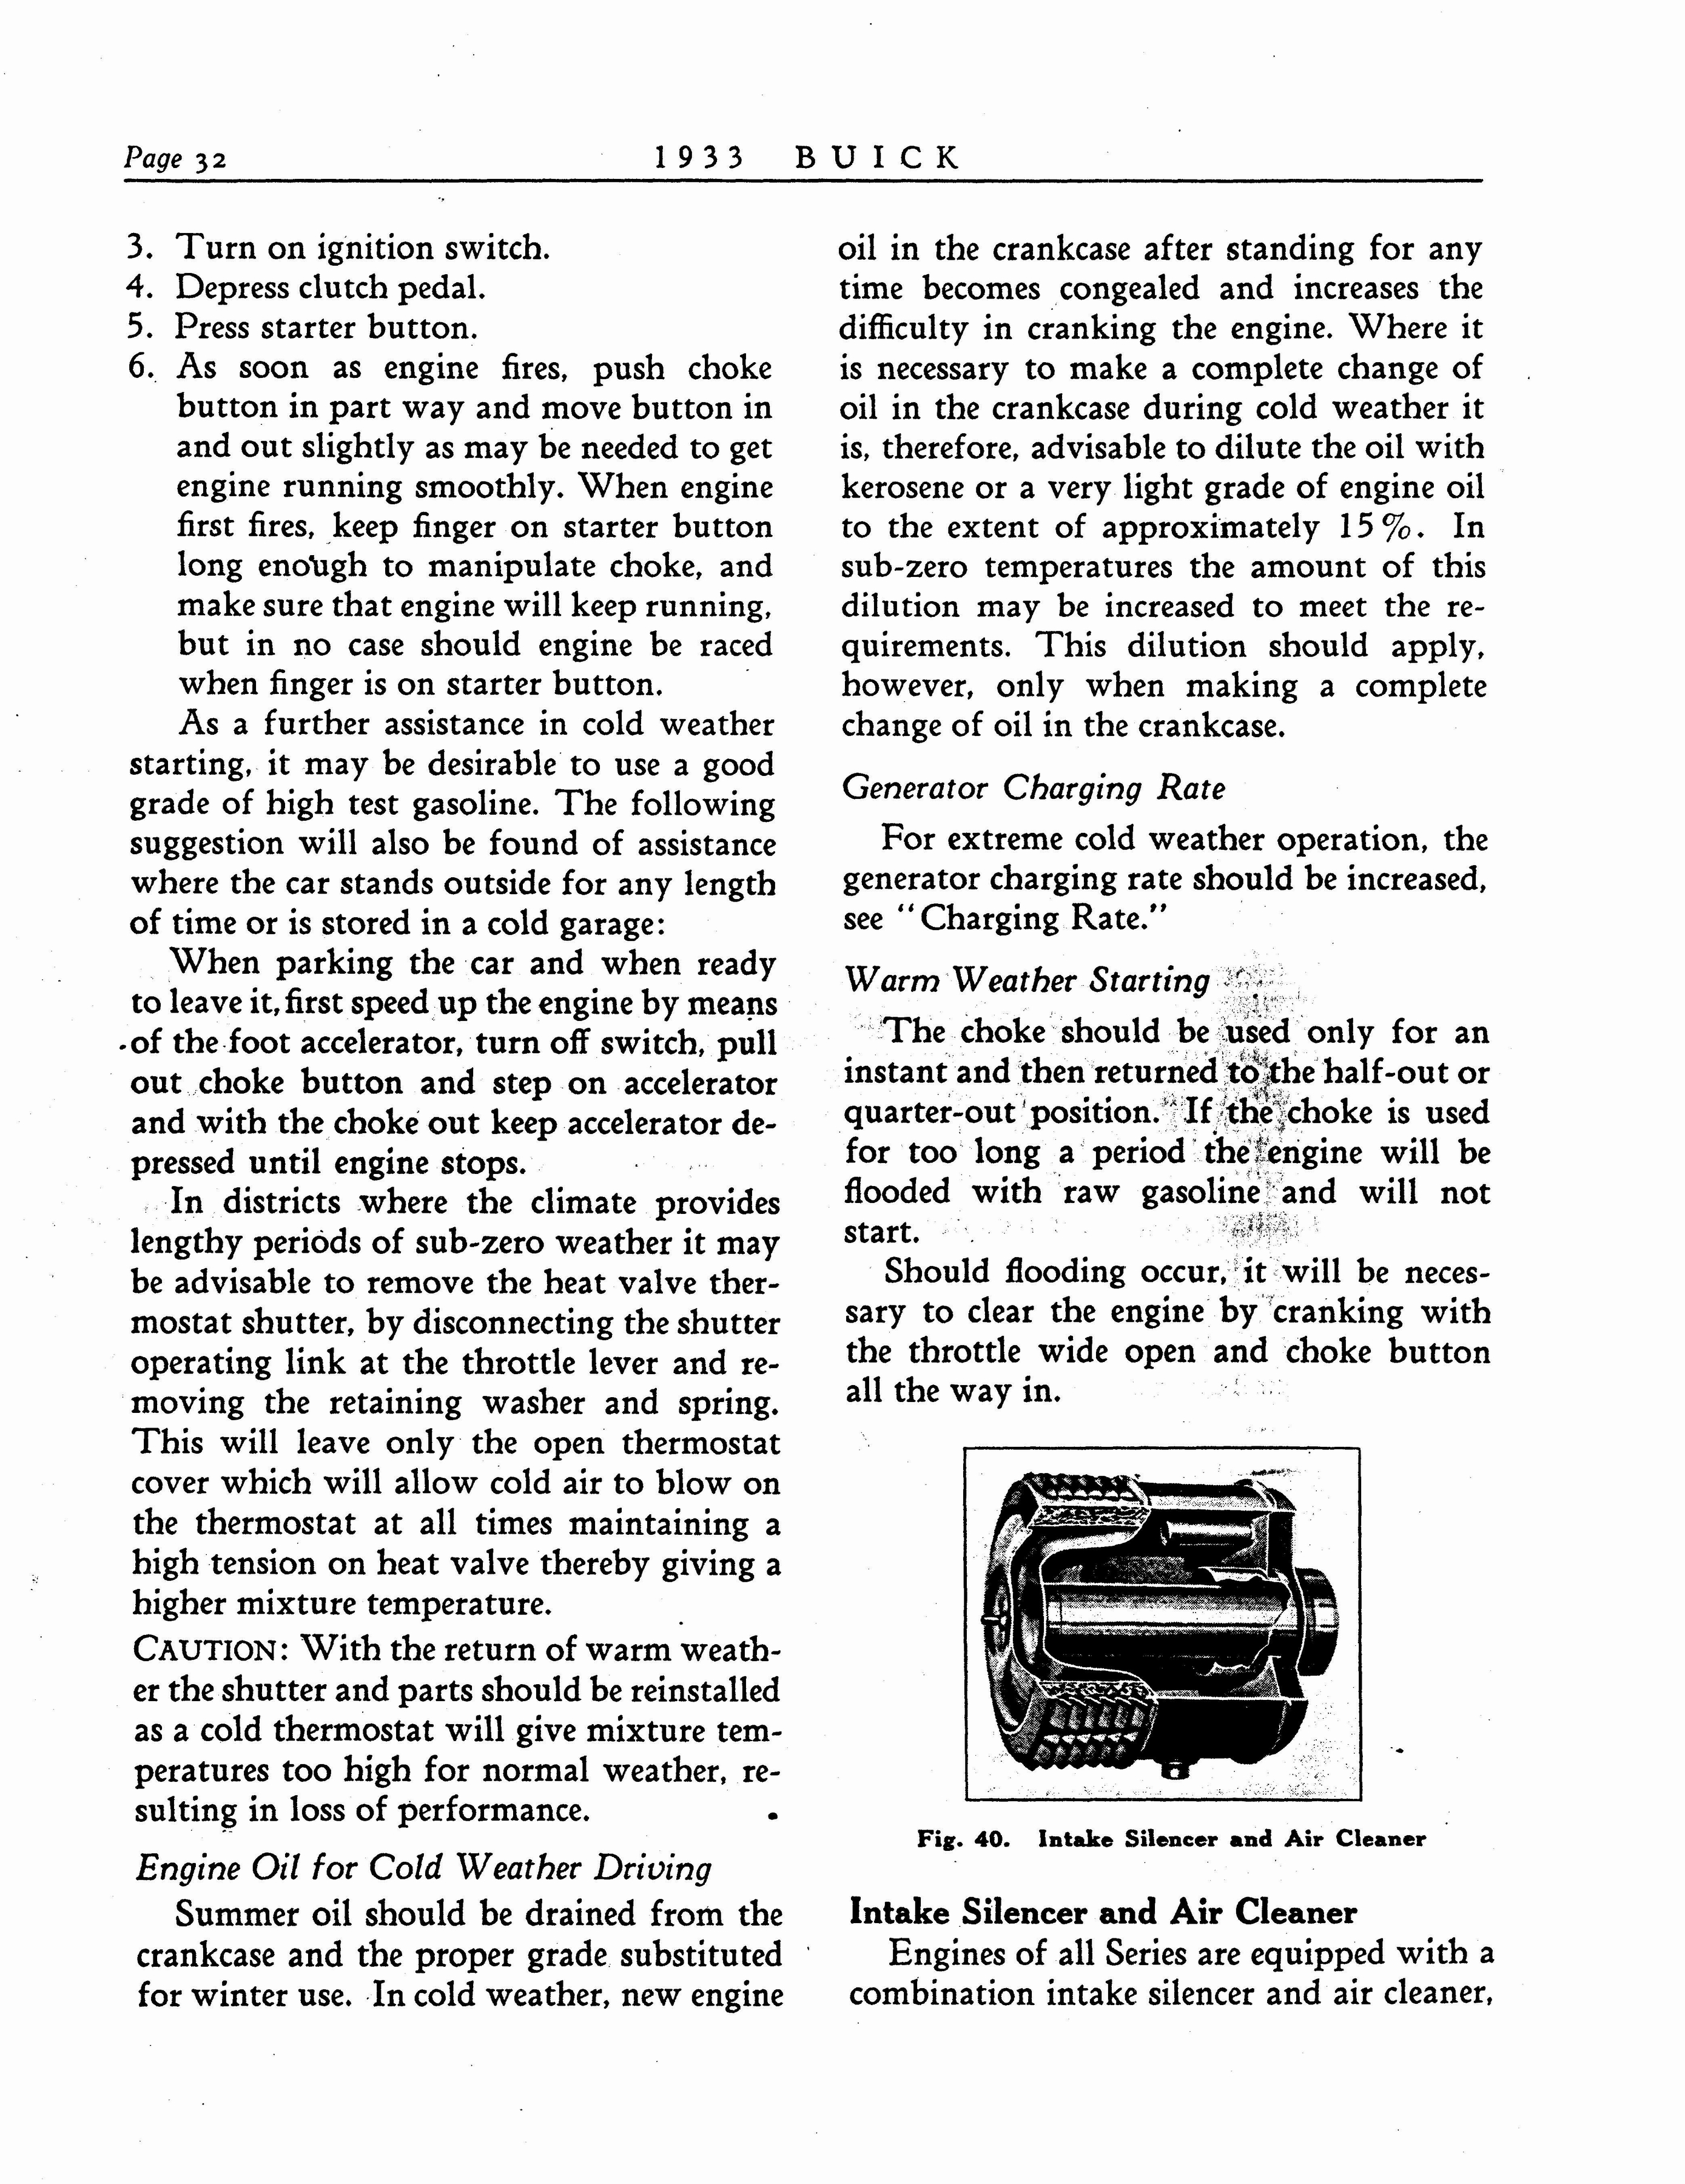 n_1933 Buick Shop Manual_Page_033.jpg